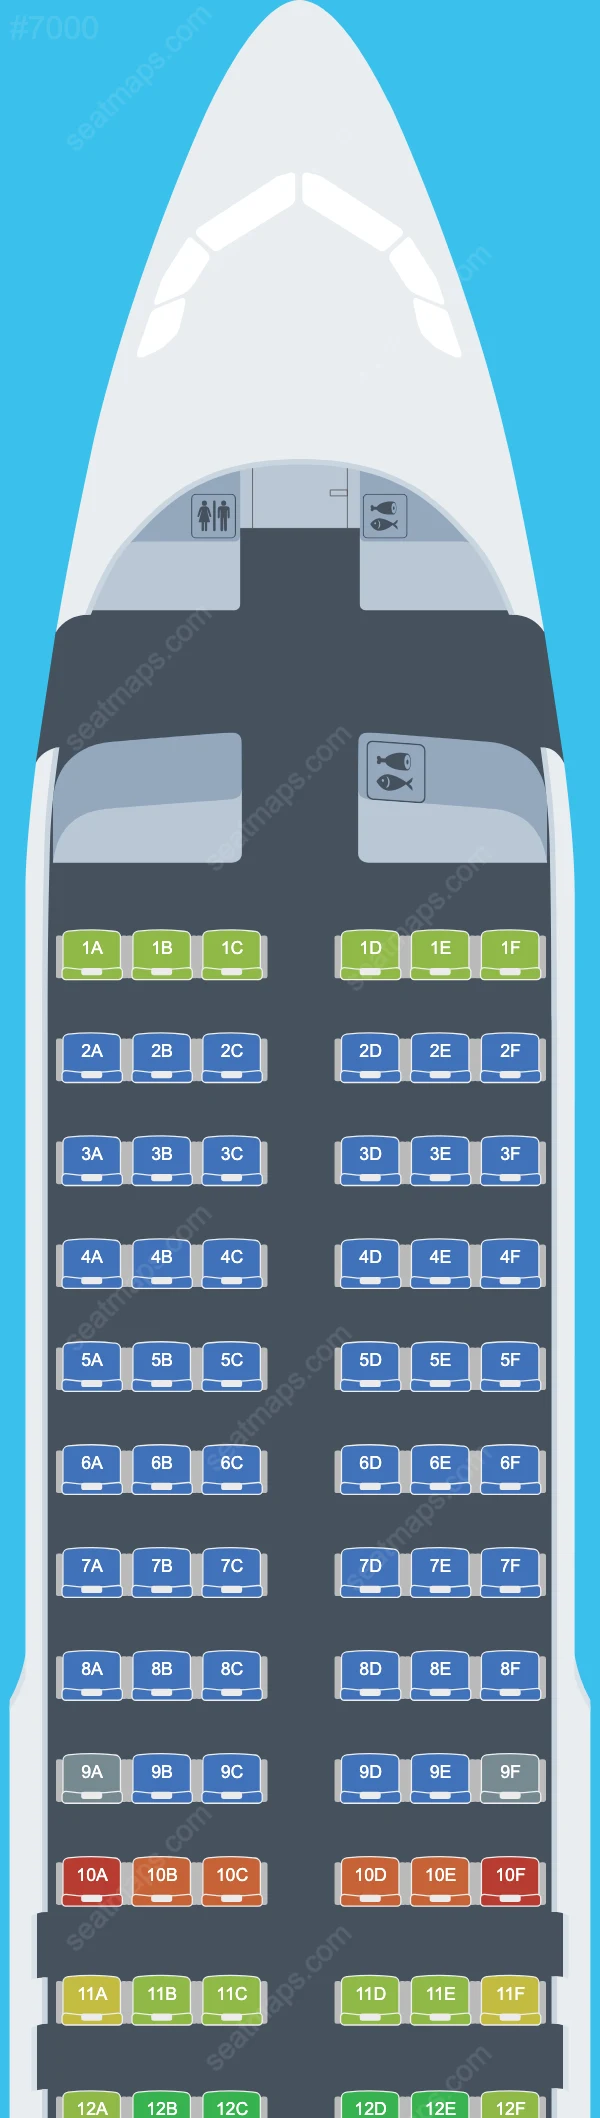 Lucky Air Airbus A320 Seat Maps A320-200